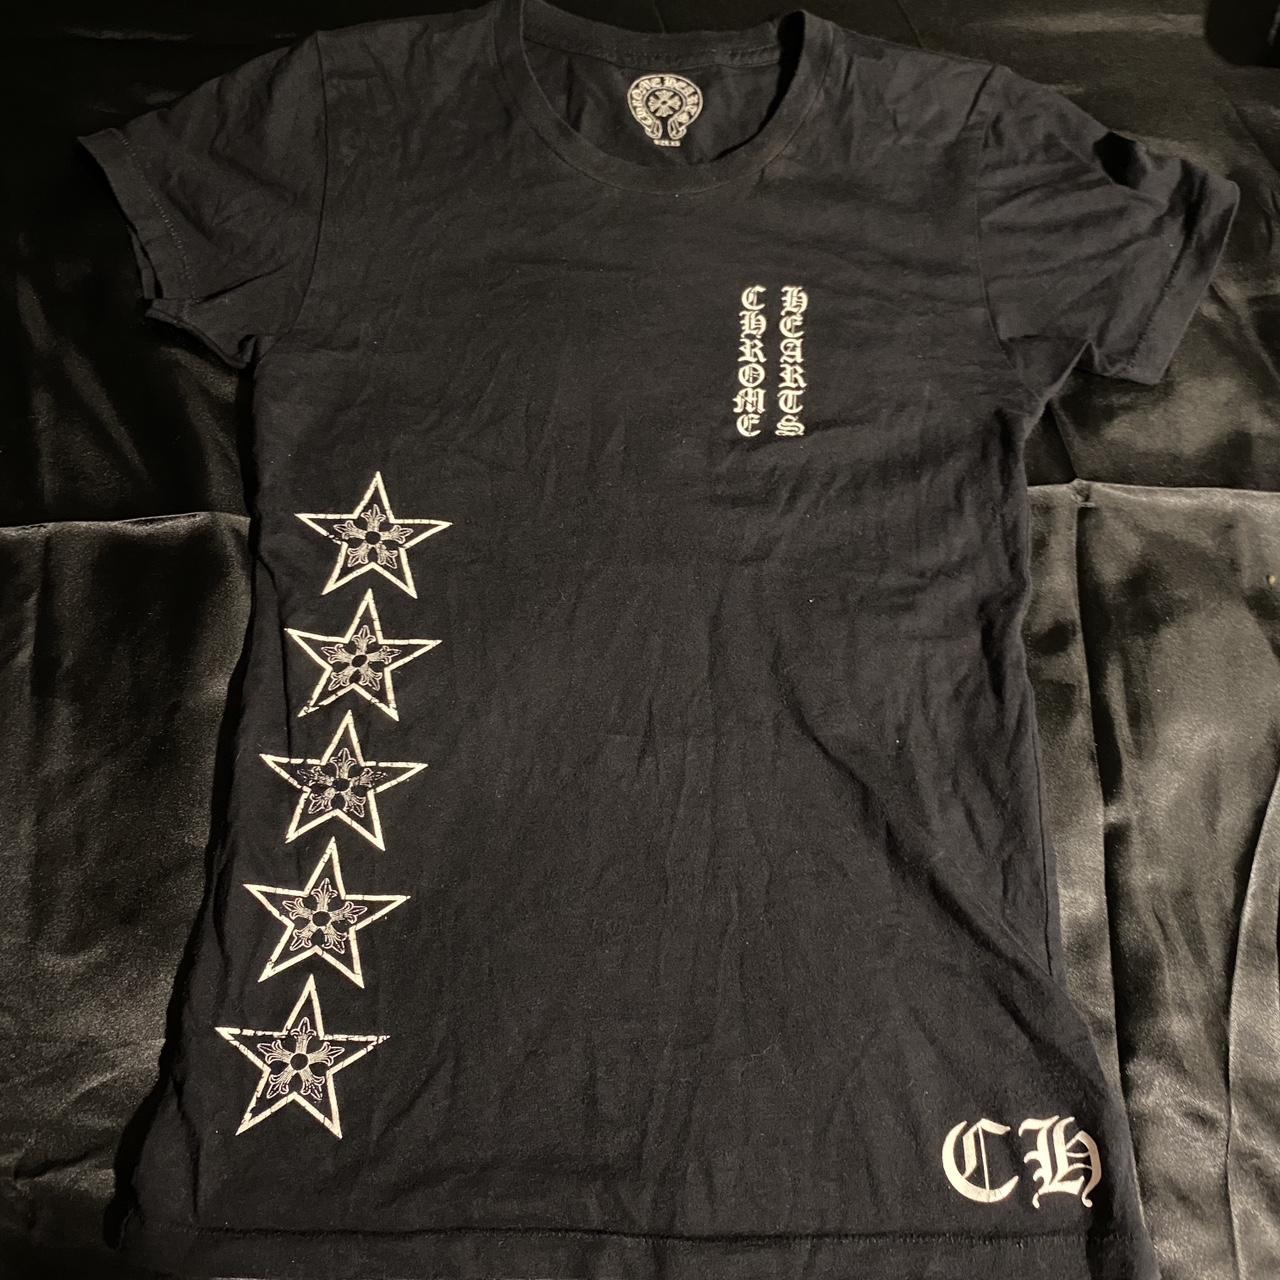 Chrome Hearts 5 Star Shirt- Size xs 100% authentic,... - Depop